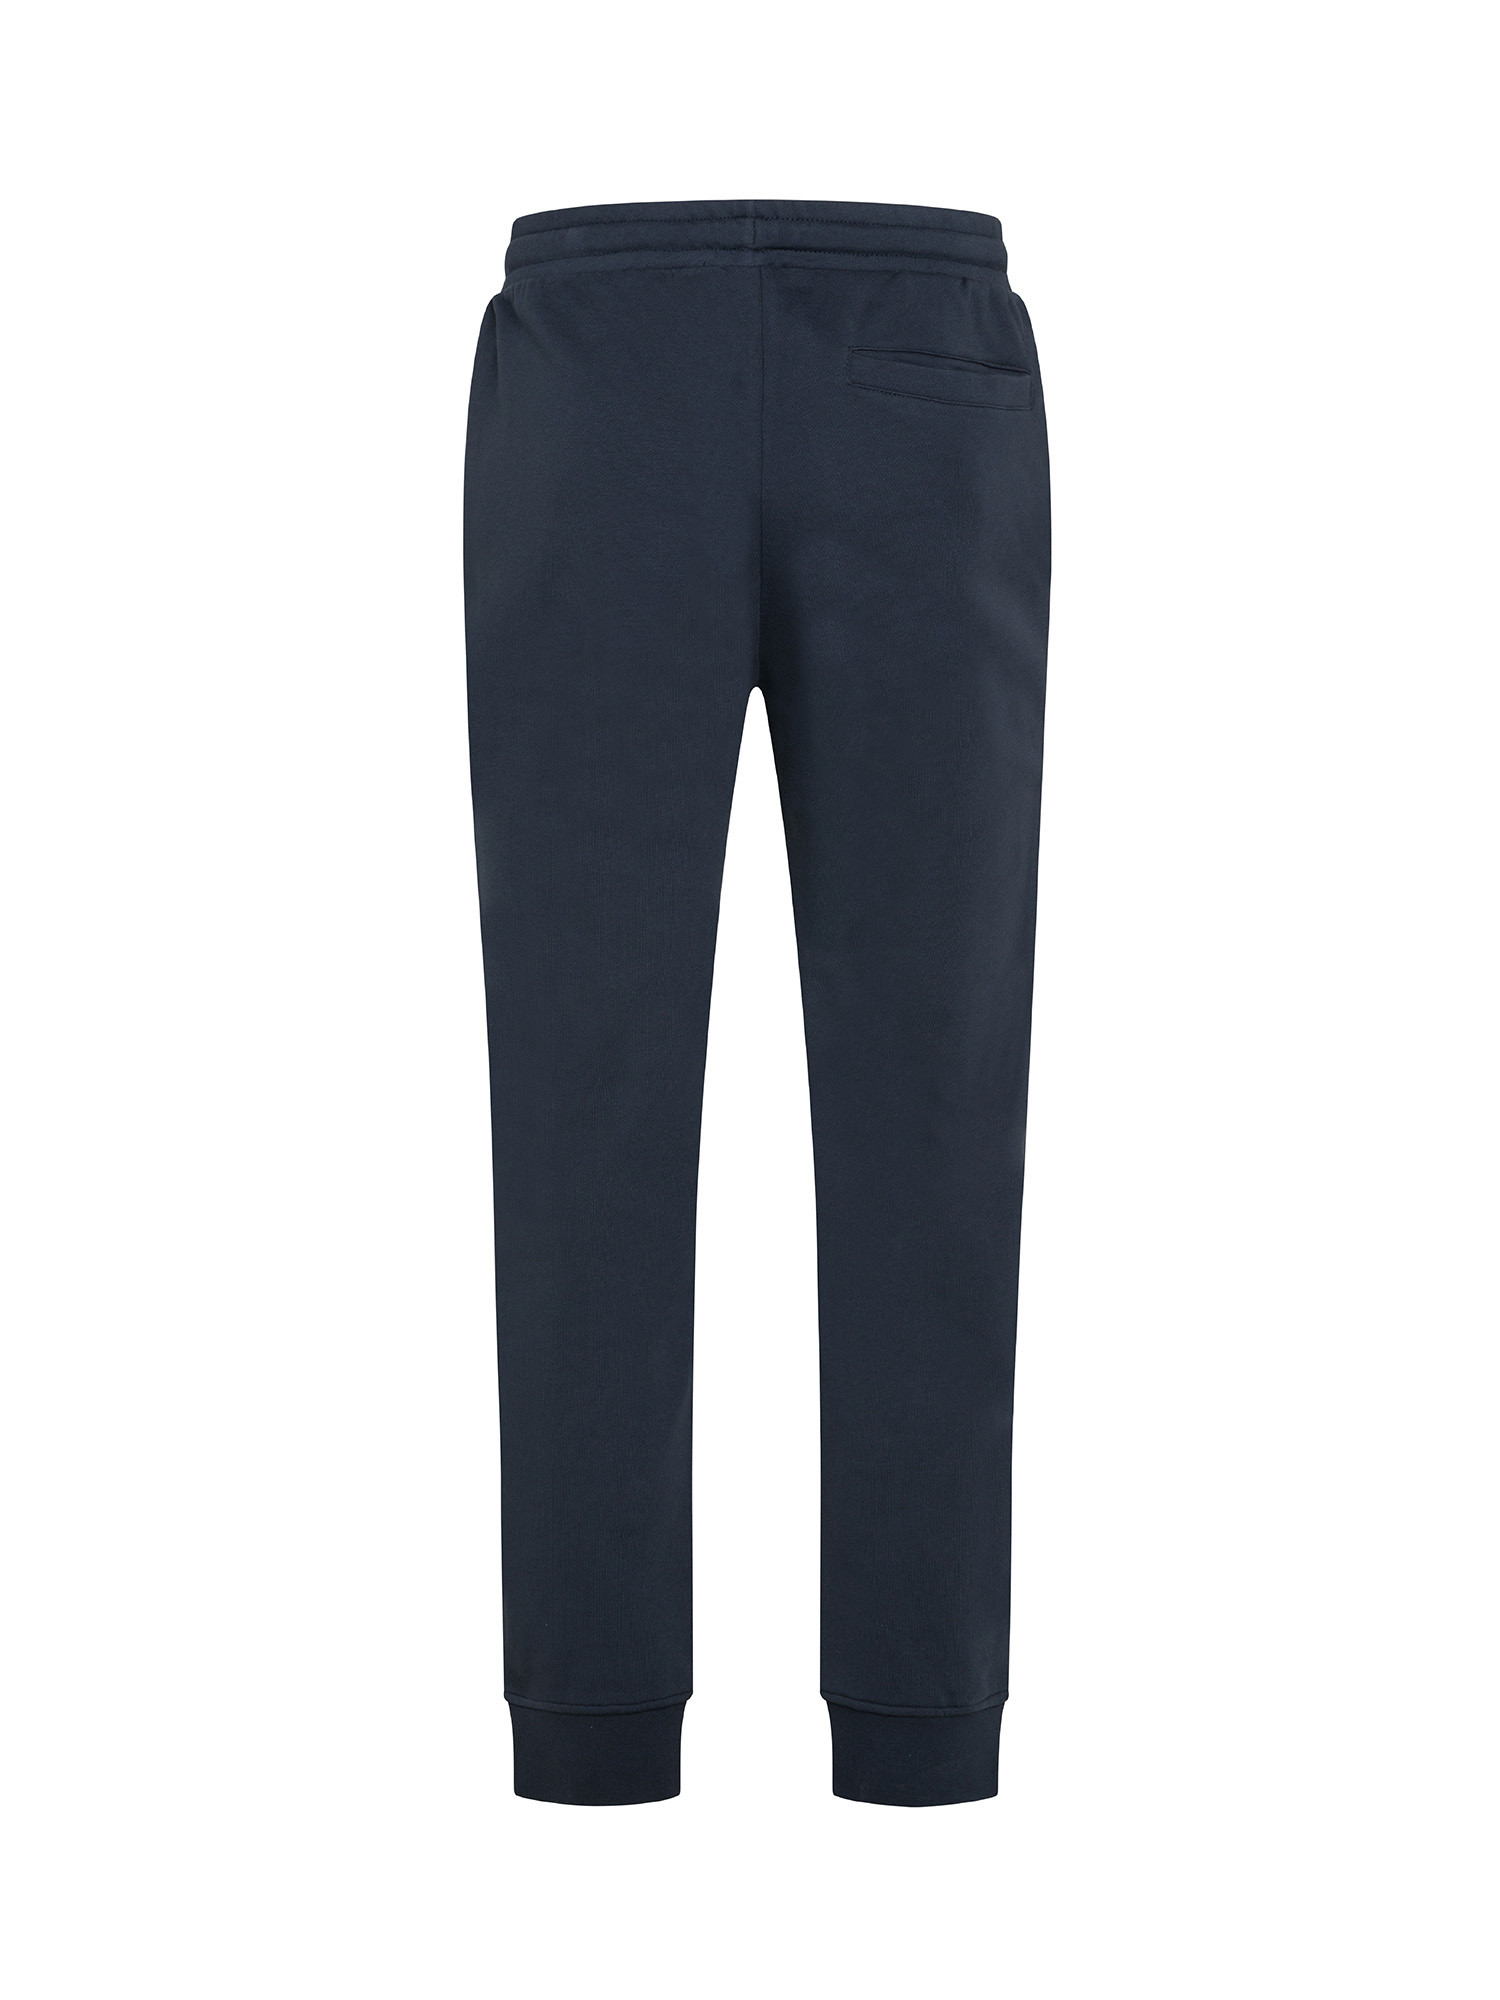 Armani Exchange - Pantaloni sportivi in cotone biologico, Blu scuro, large image number 1